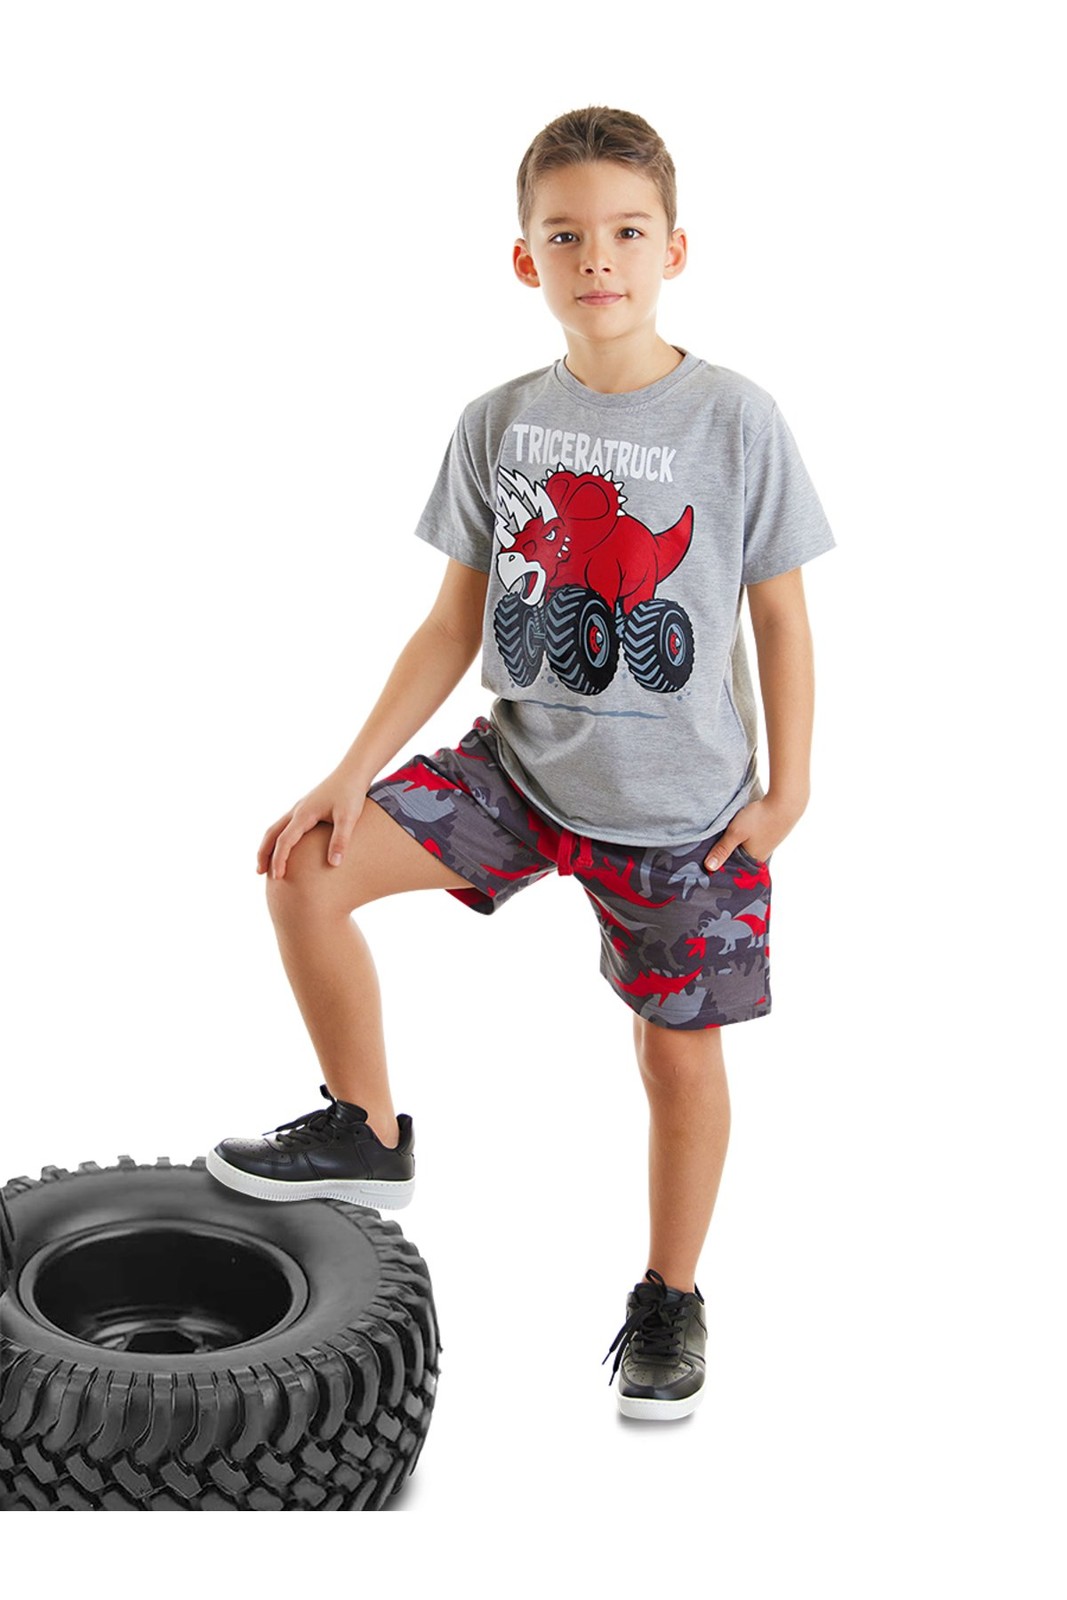 Mushi Triceratruck Boys T-shirt Shorts Set